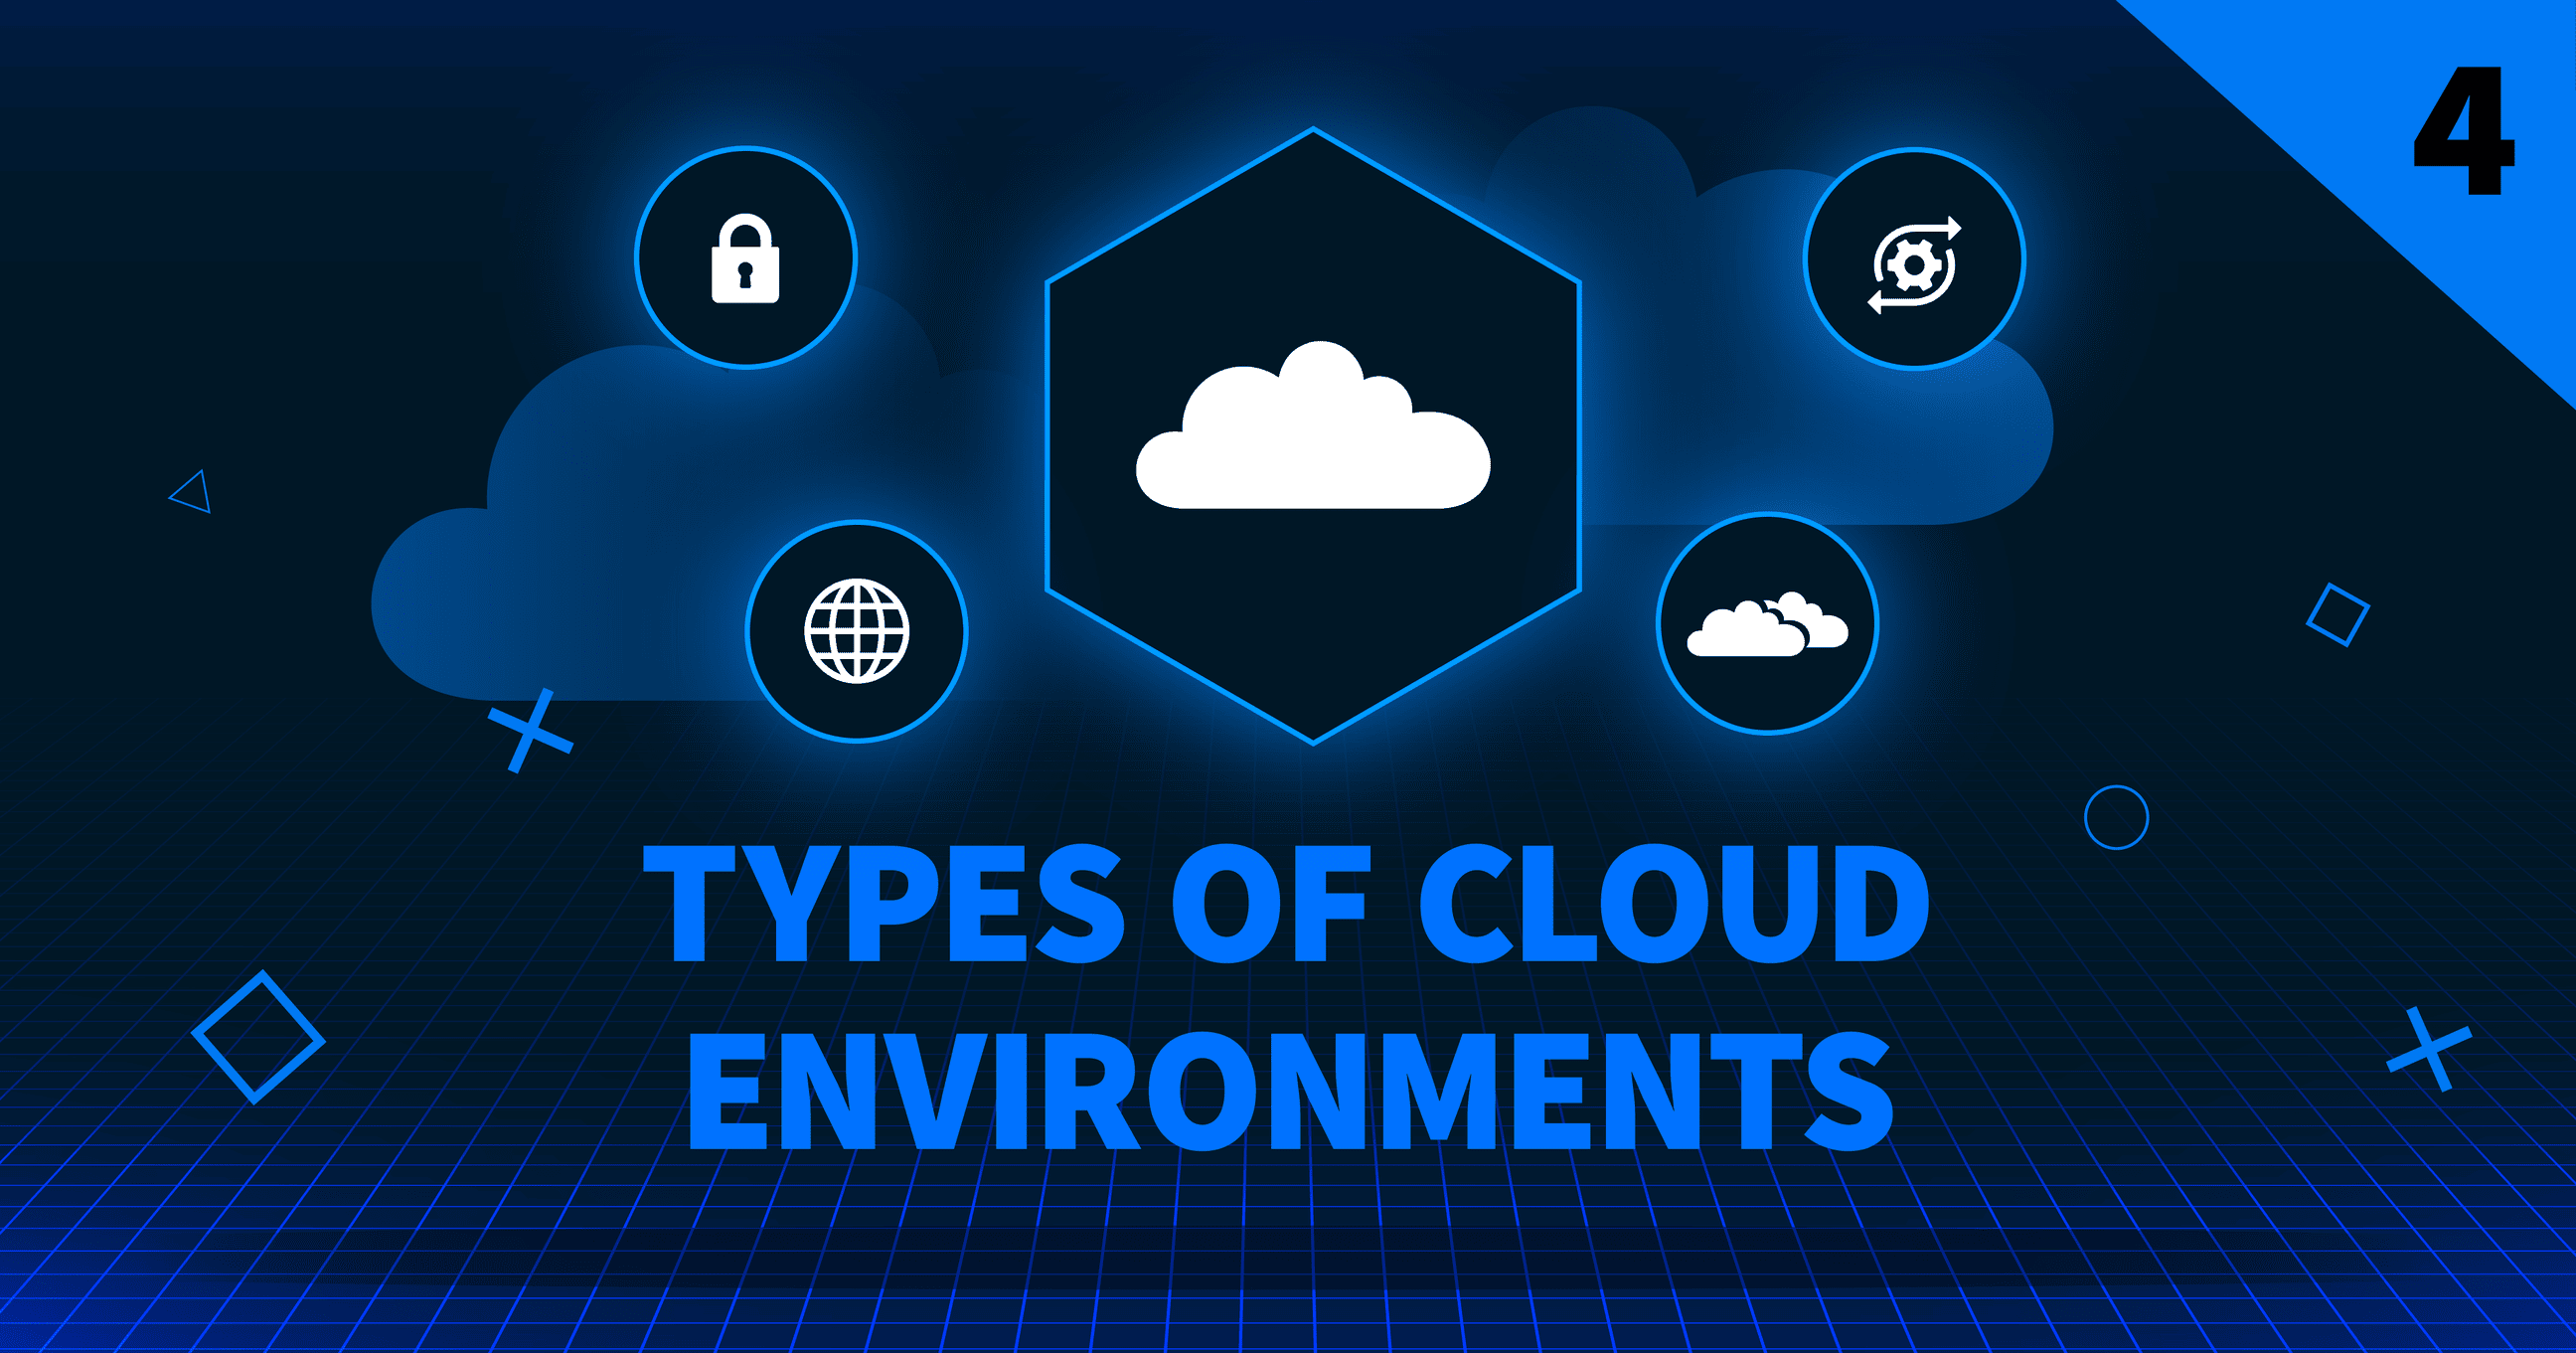 Types of Cloud Environments Blog Header Image